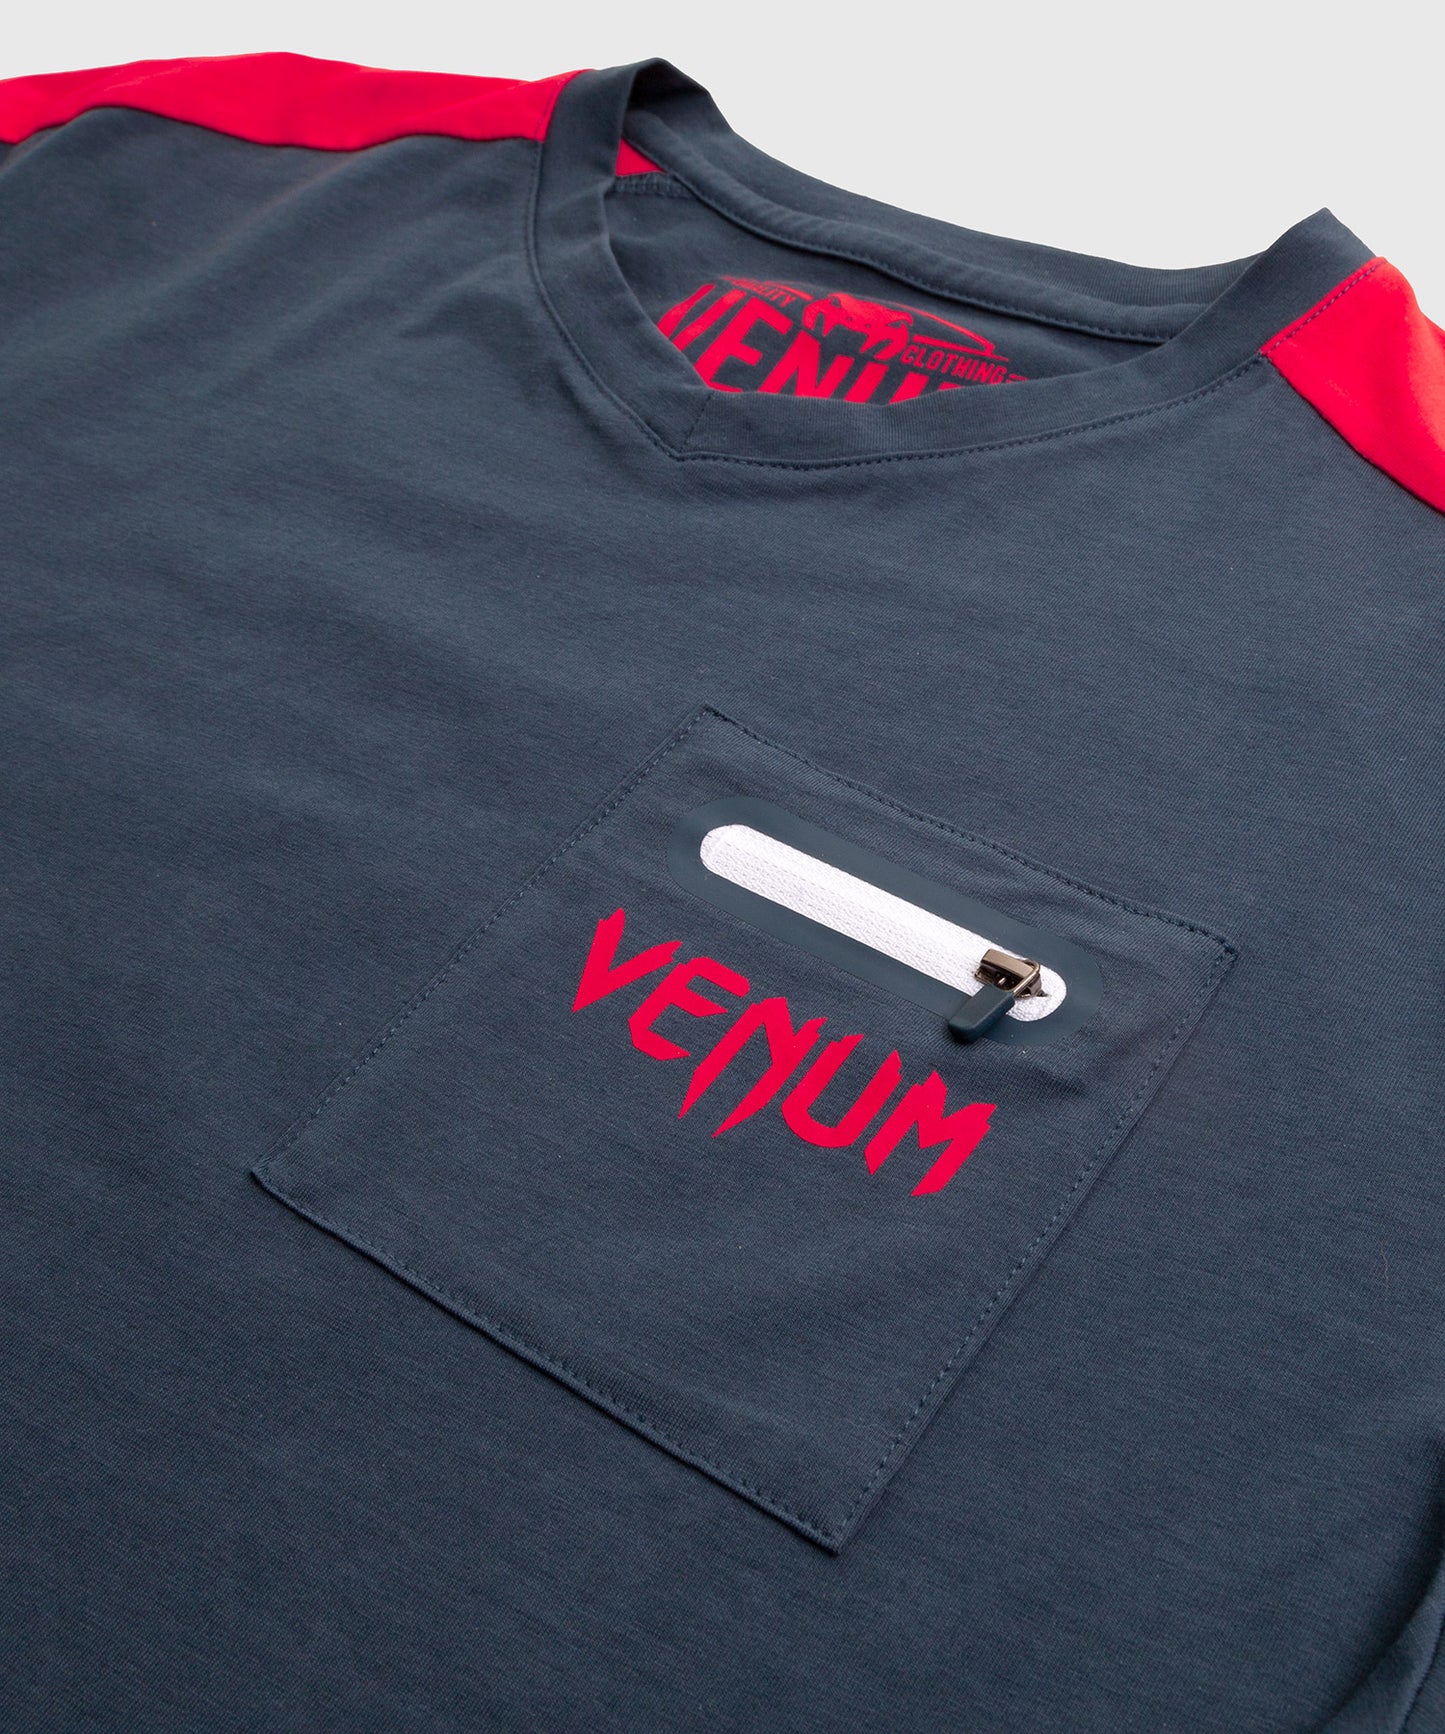 Venum Cargo T-Shirt - dark_blue_raspberry_white